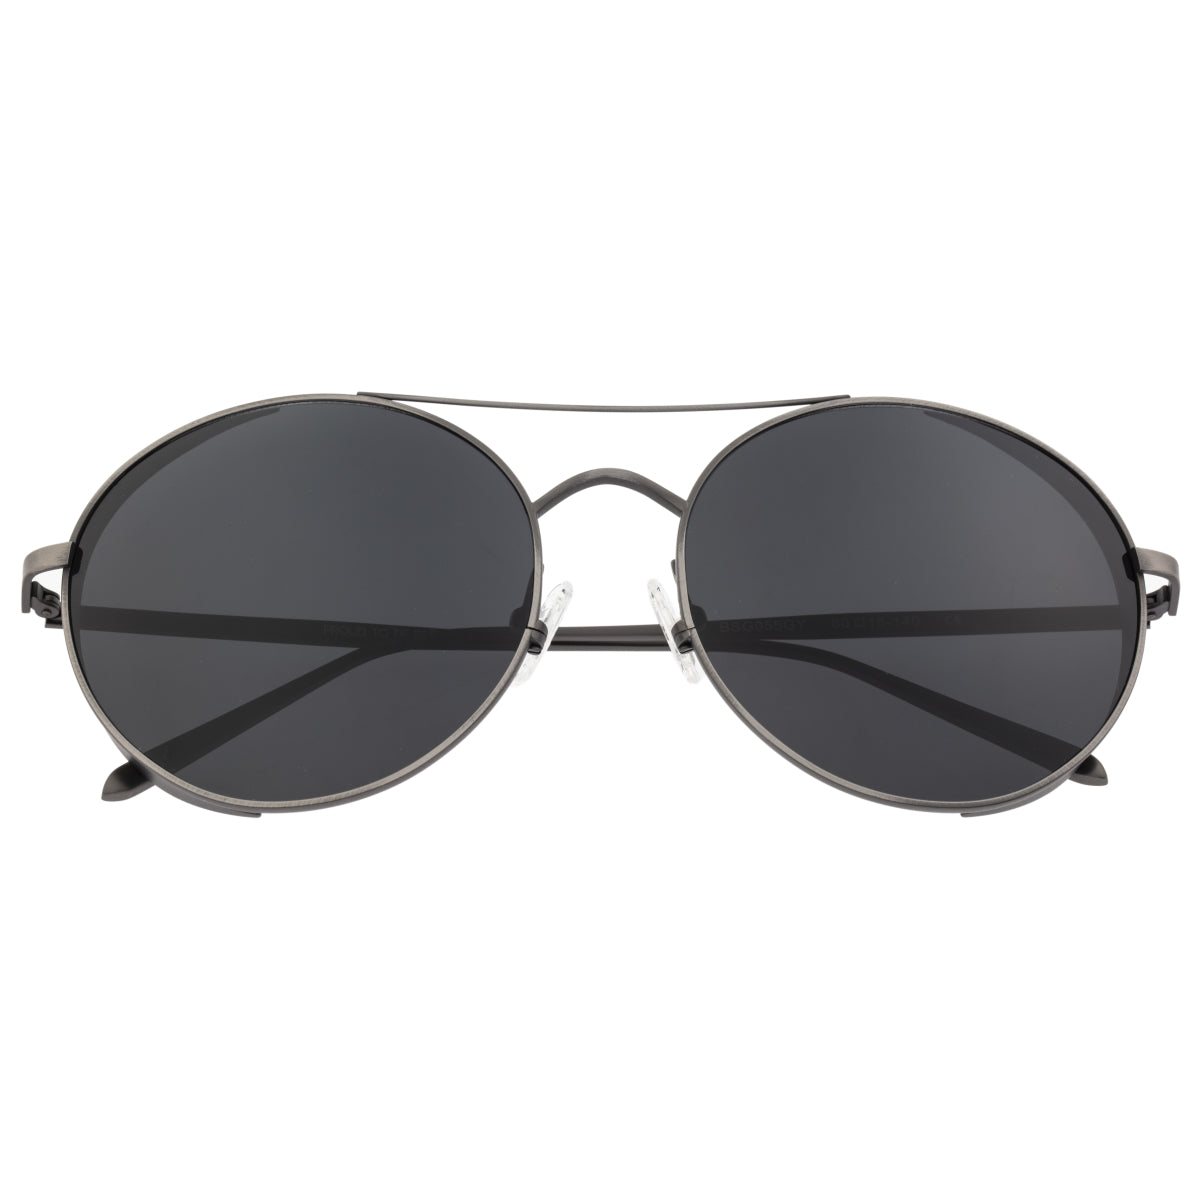 Breed Barlow Titanium Polarized Sunglasses - Gunmetal/Black - BSG055GY